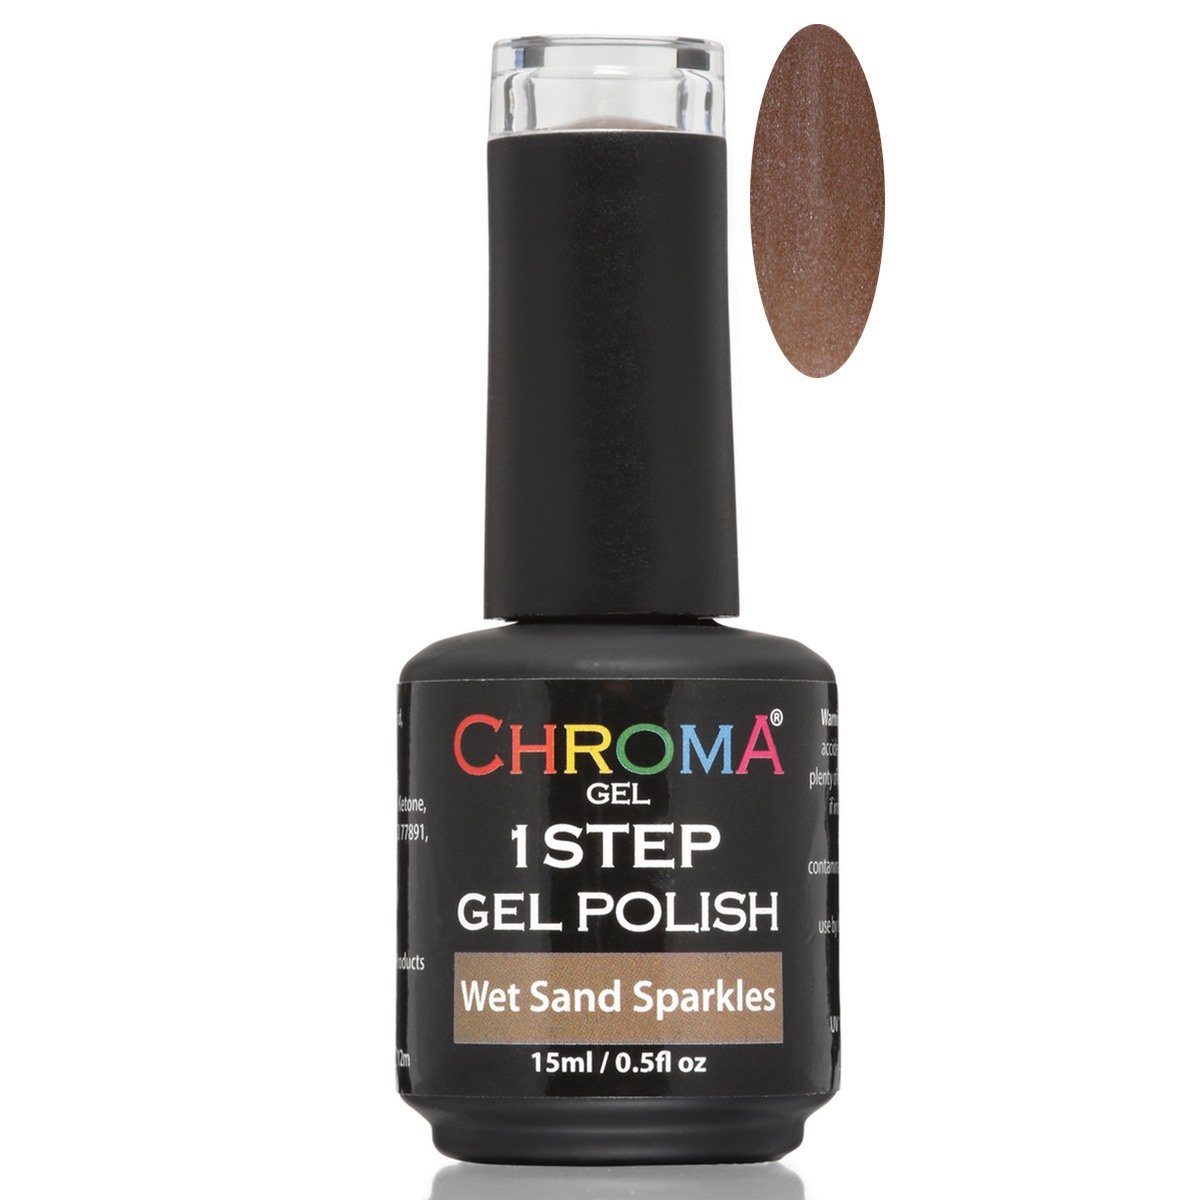 Chroma Gel 1 Step Gel Polish Wet Sand Sparkles No.64 - Beauty Hair Products LtdChroma Gel